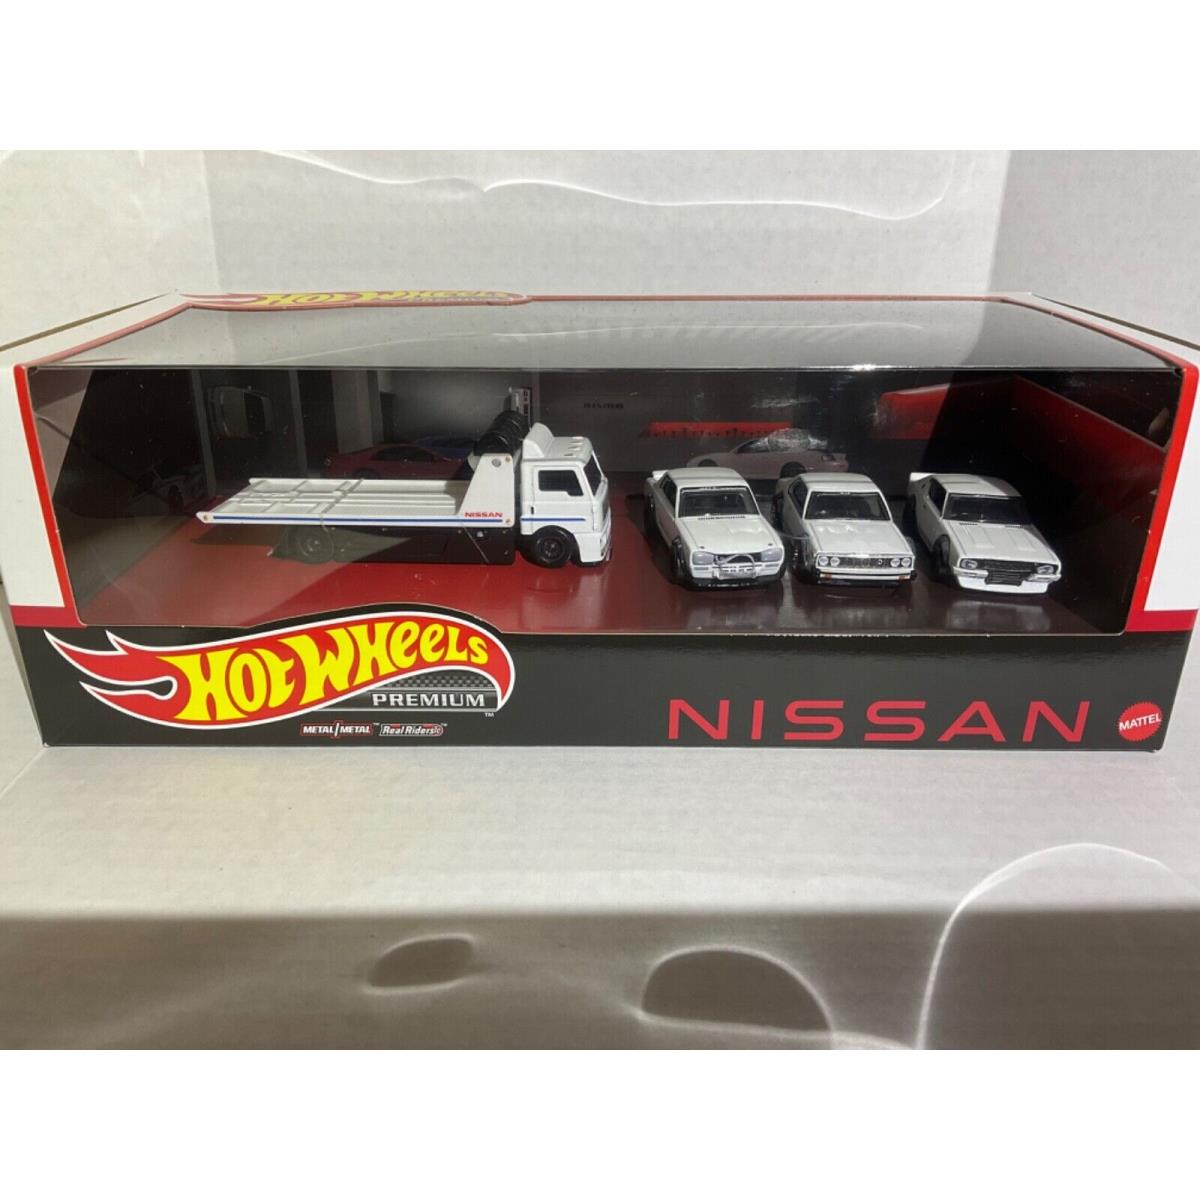 Hot Wheels toy Nissan Skyline - White